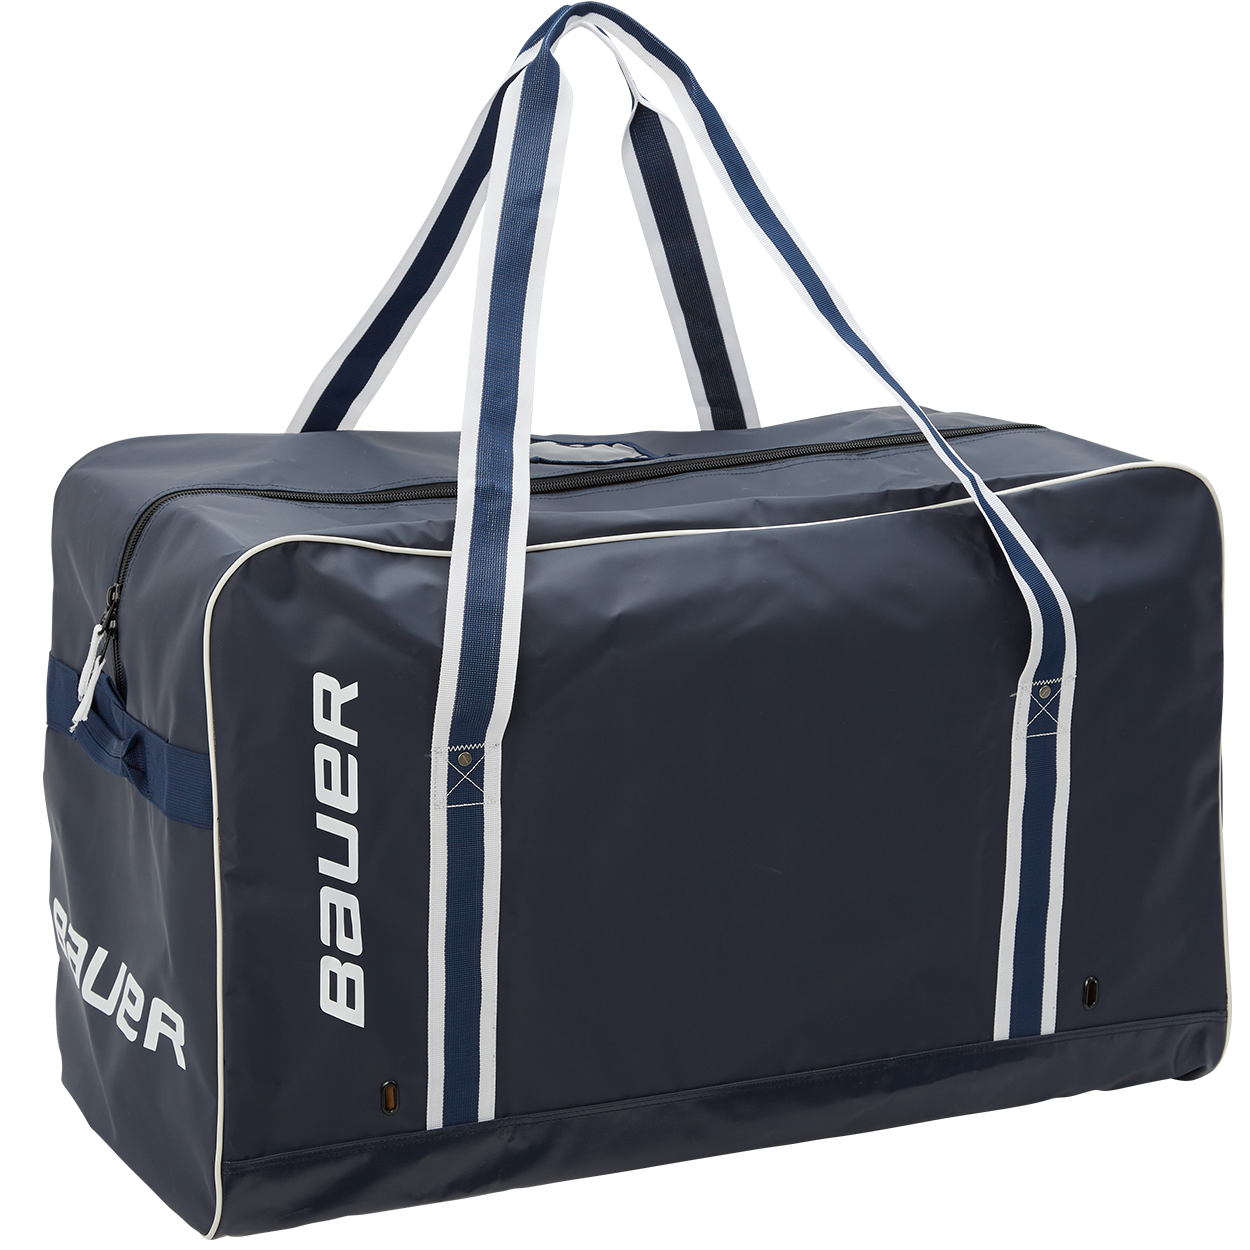 Bauer S20 Pro Carry Bag Bag Senior